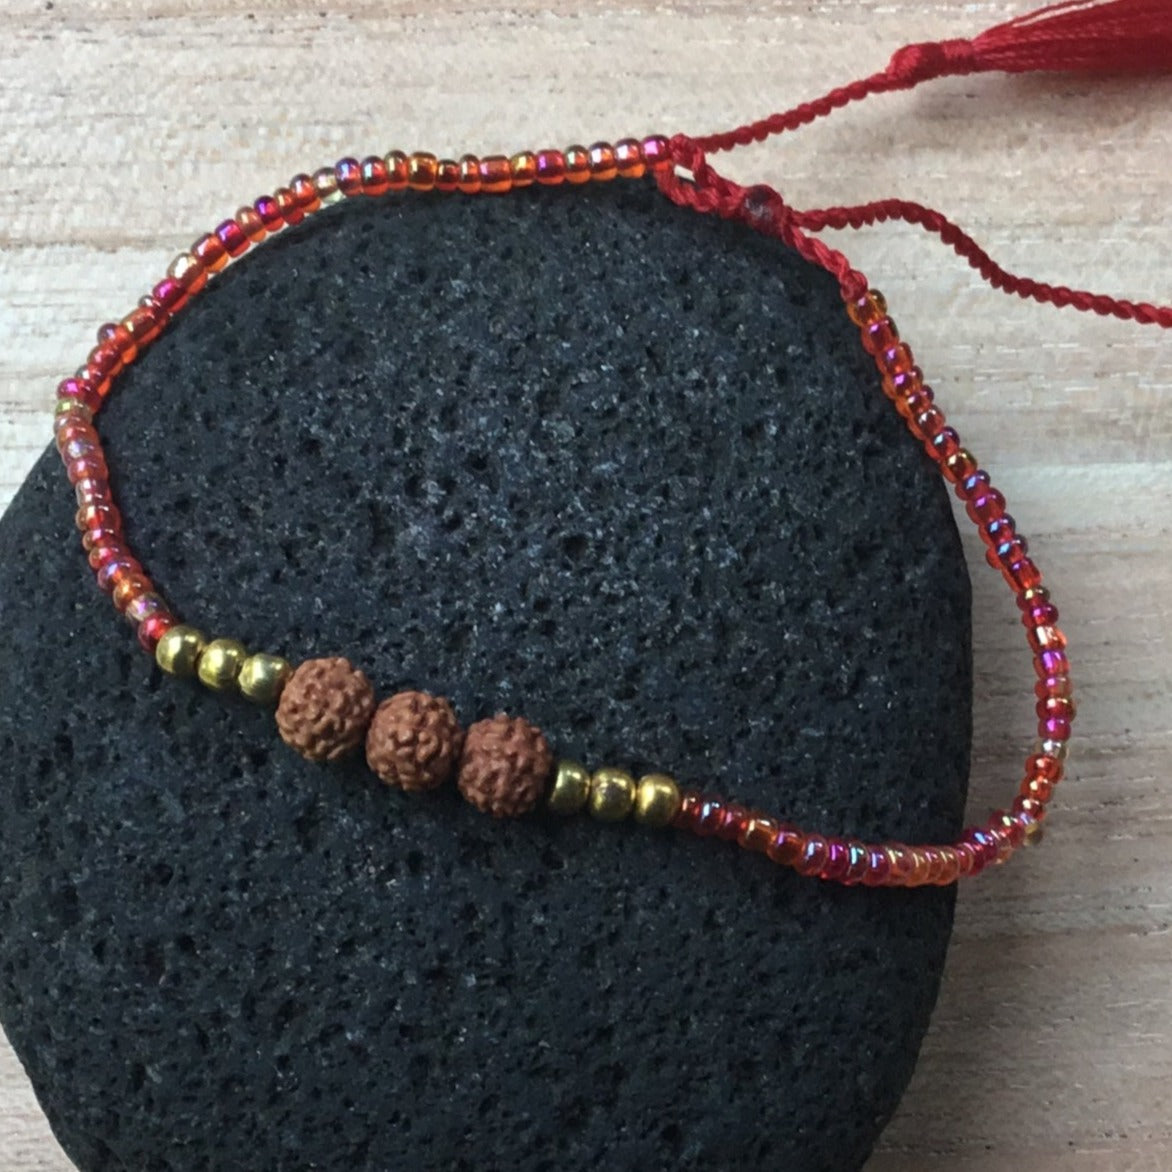 thin red adjustable bead bracelet.